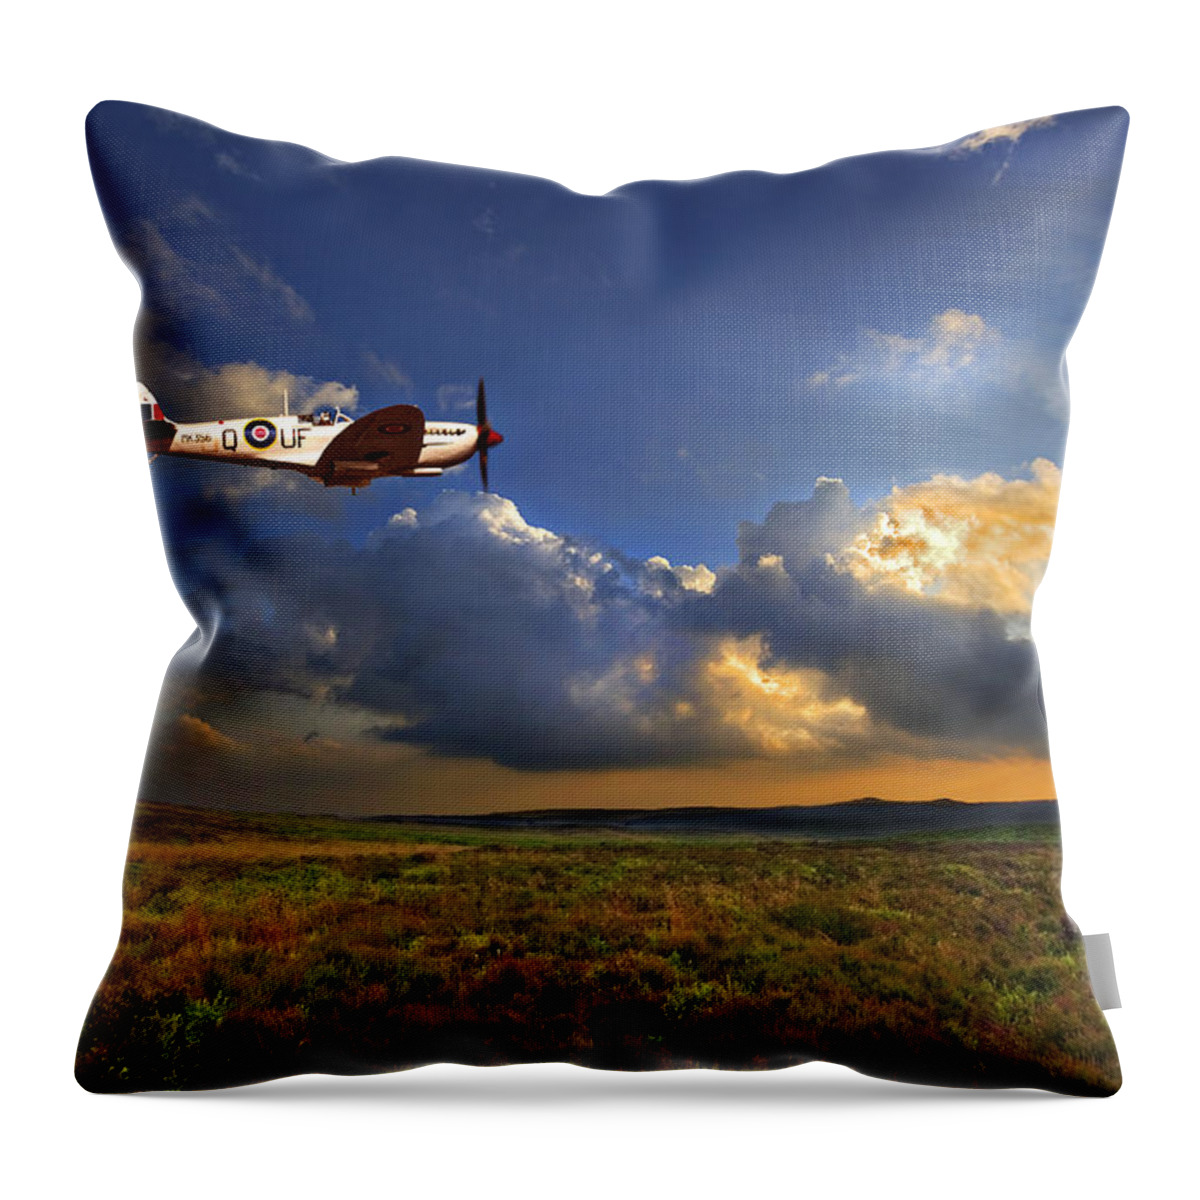 Spitfire Throw Pillow featuring the photograph Evening Spitfire by Meirion Matthias